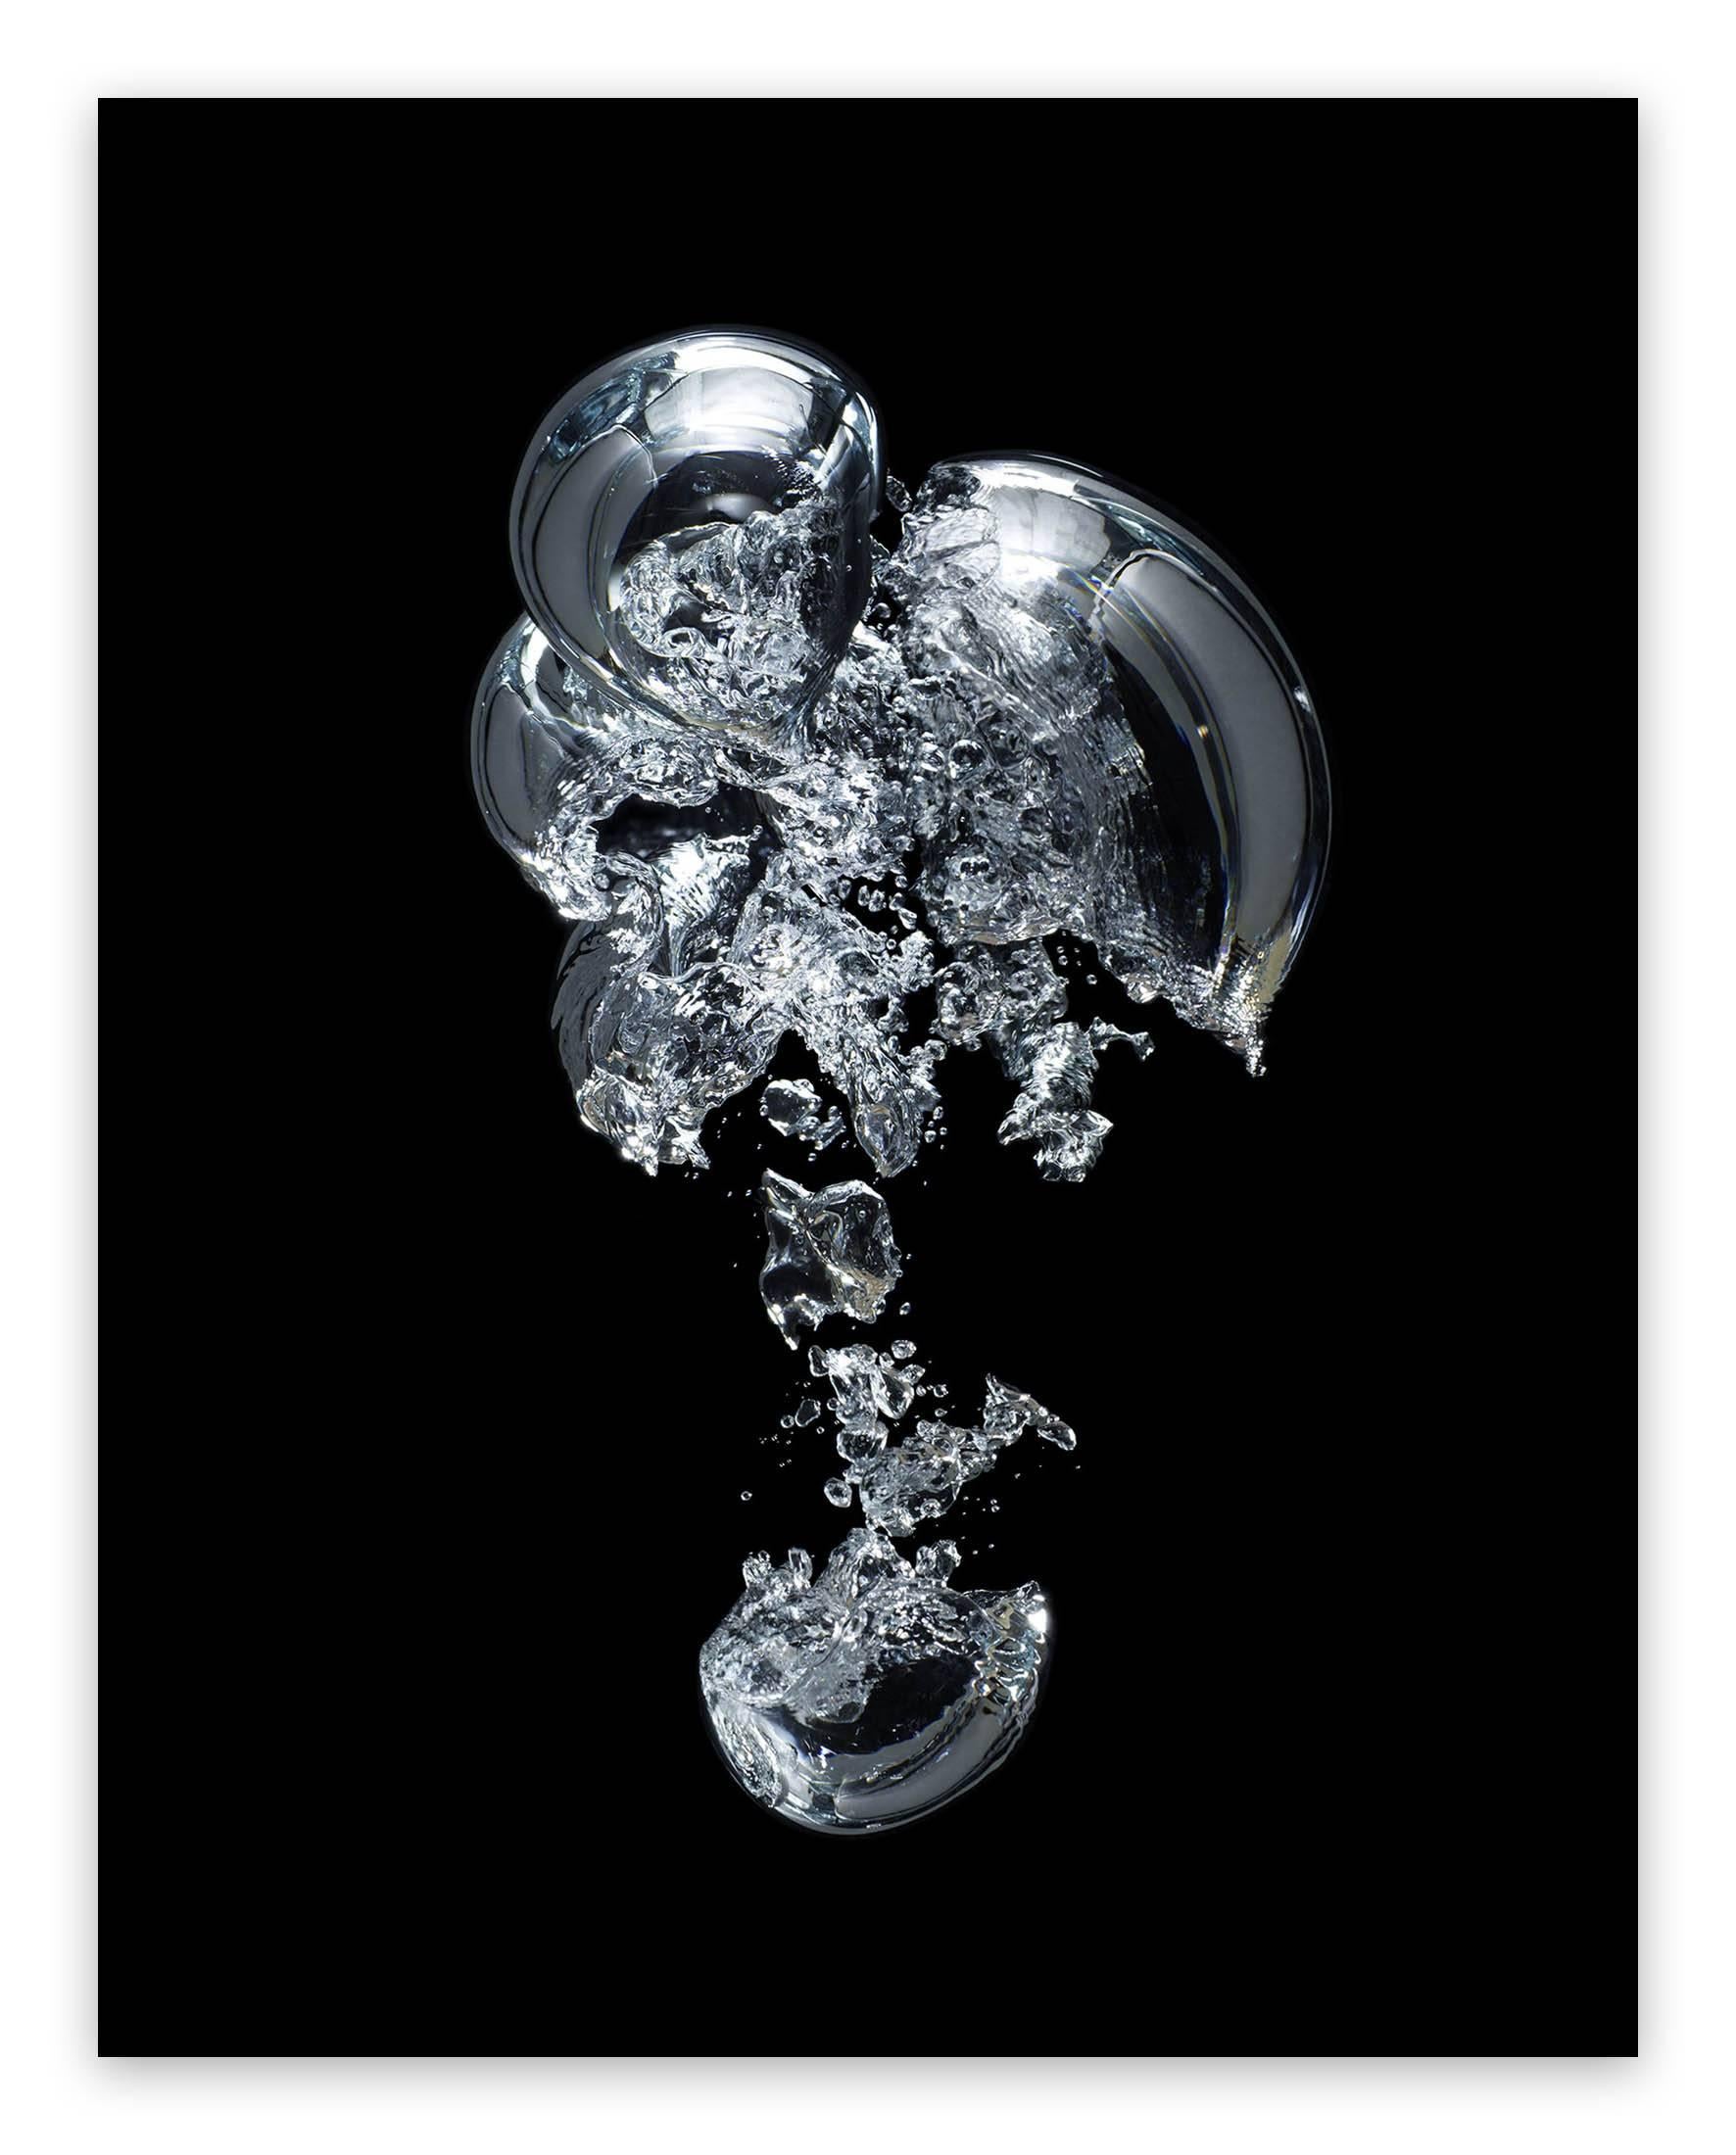 Black and White Photograph Seb Janiak - Gravity Bulle d'air 01  (Photographie abstraite)